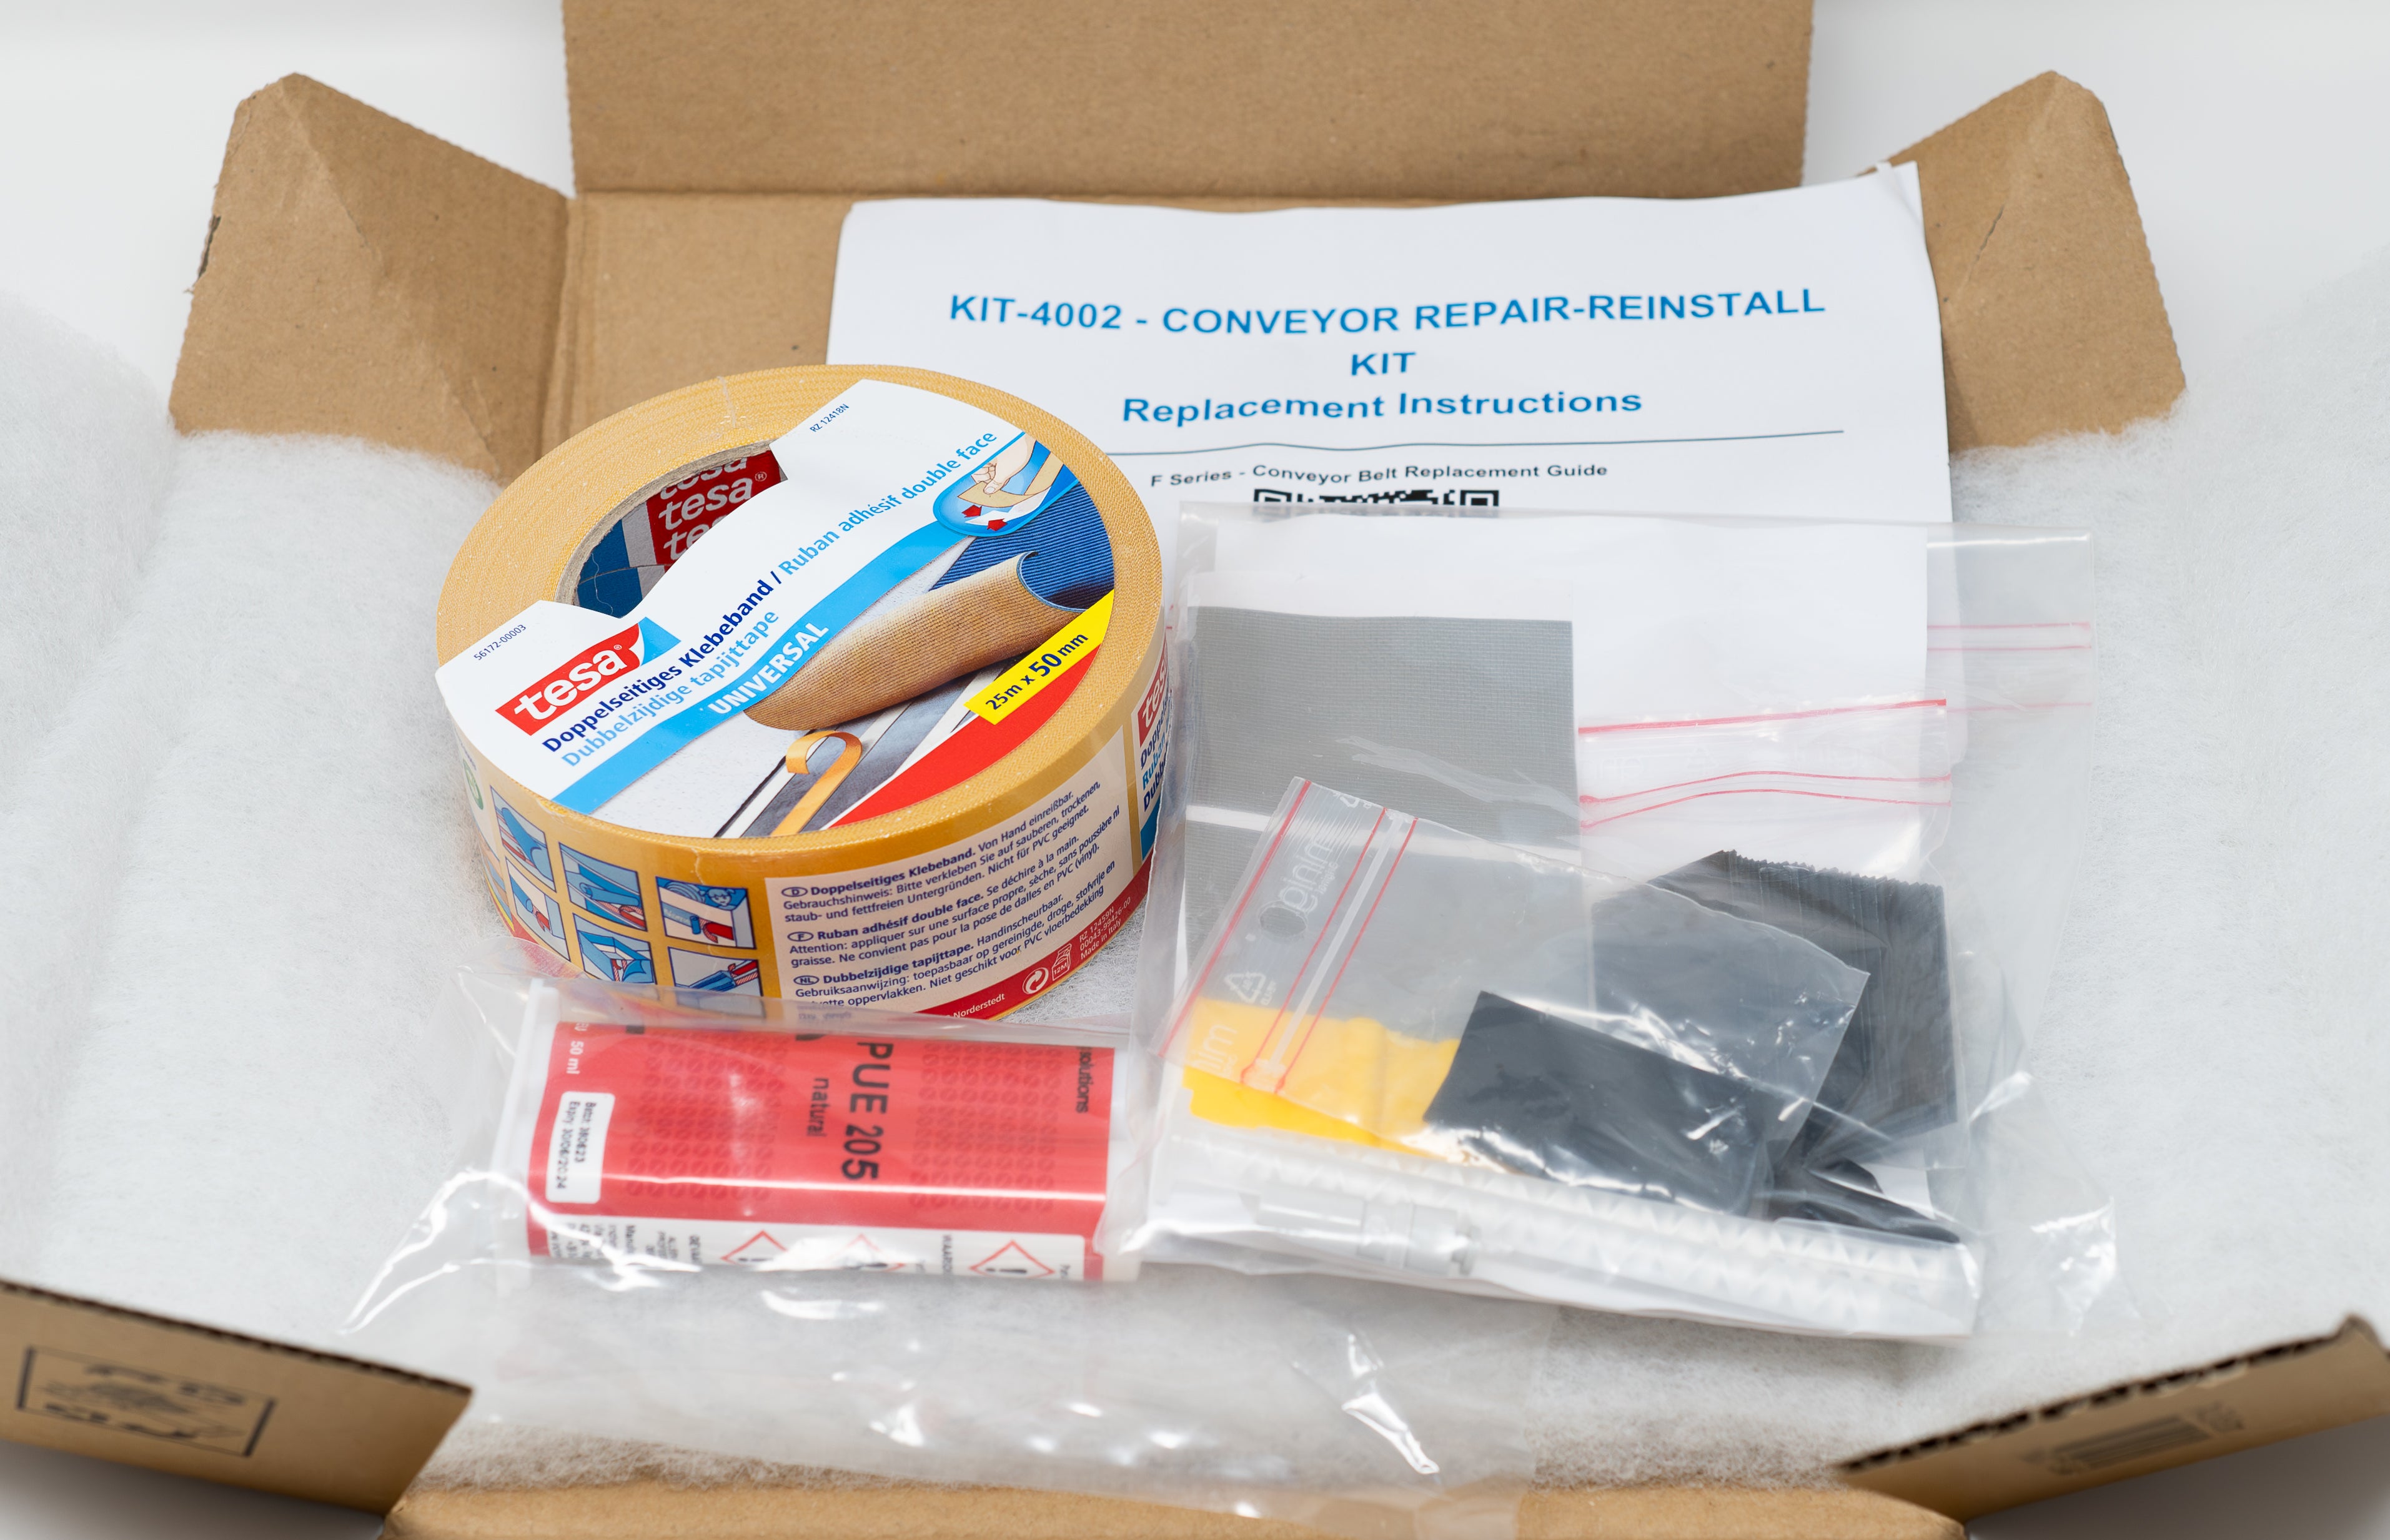 Conveyor Repair Reinstall Kit